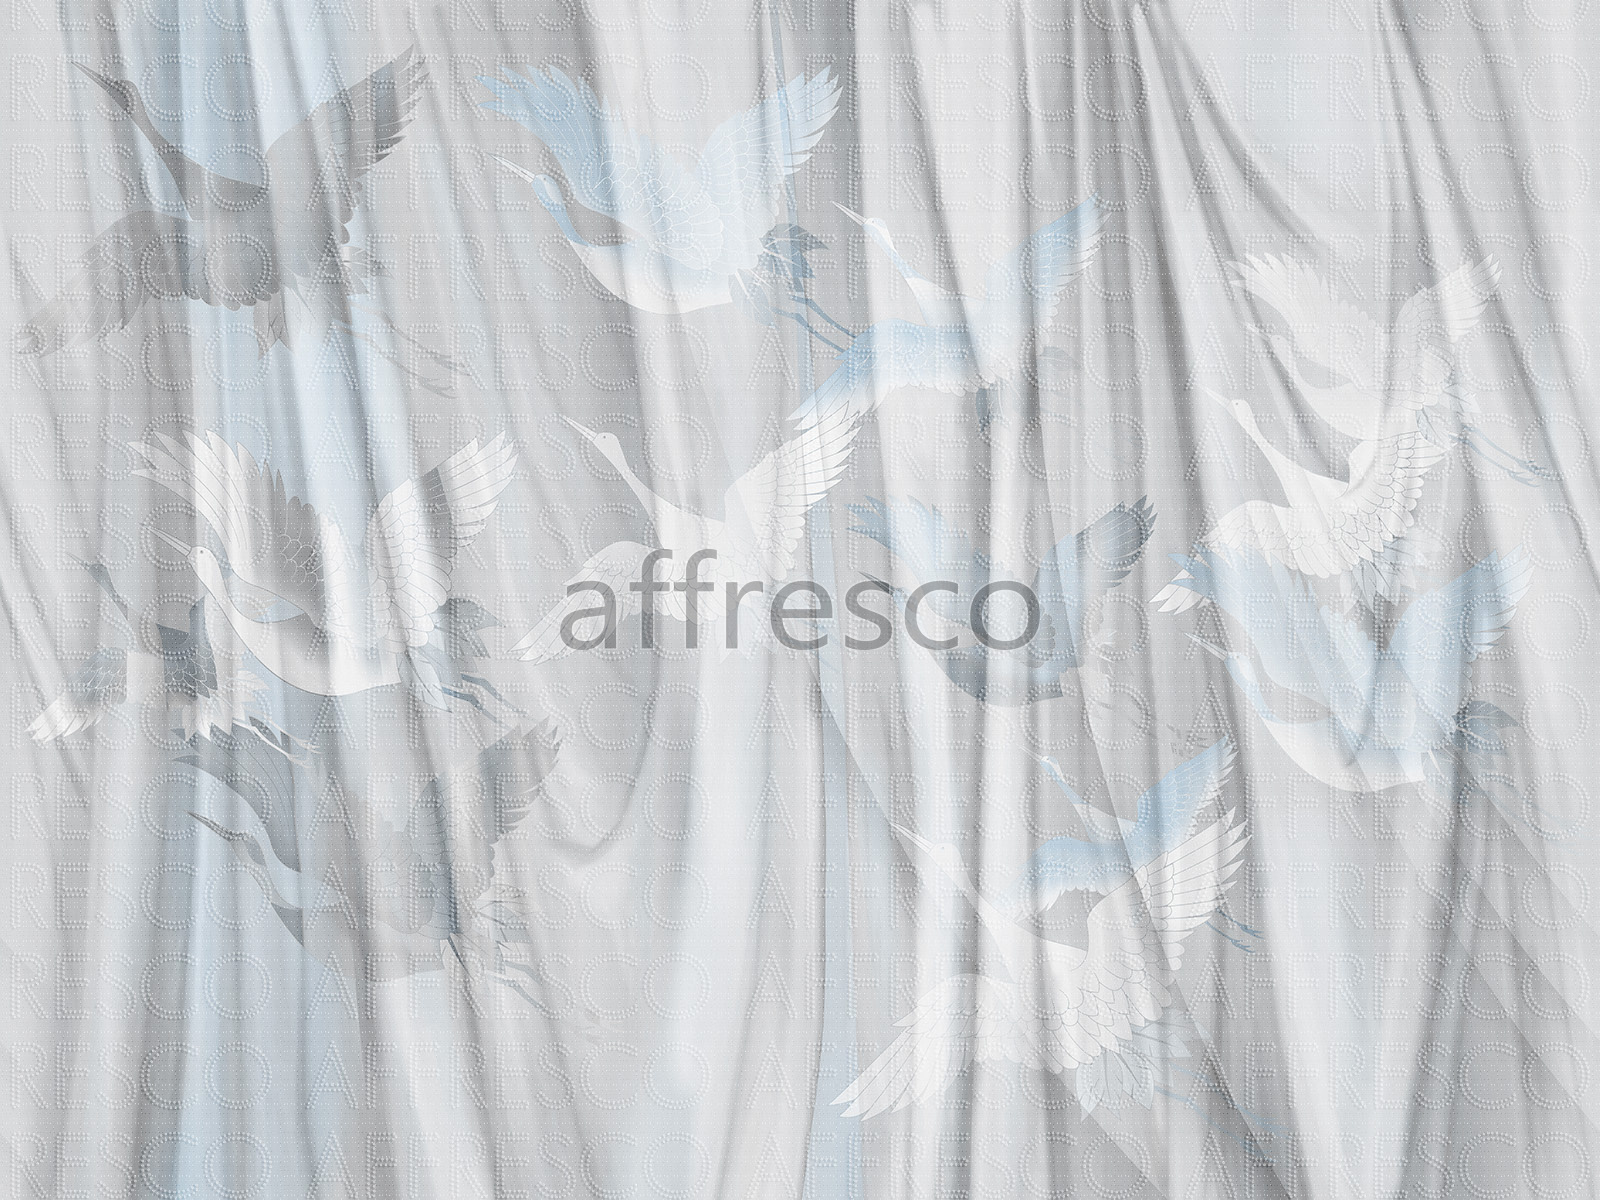 RE936-COL2 | Fine Art | Affresco Factory